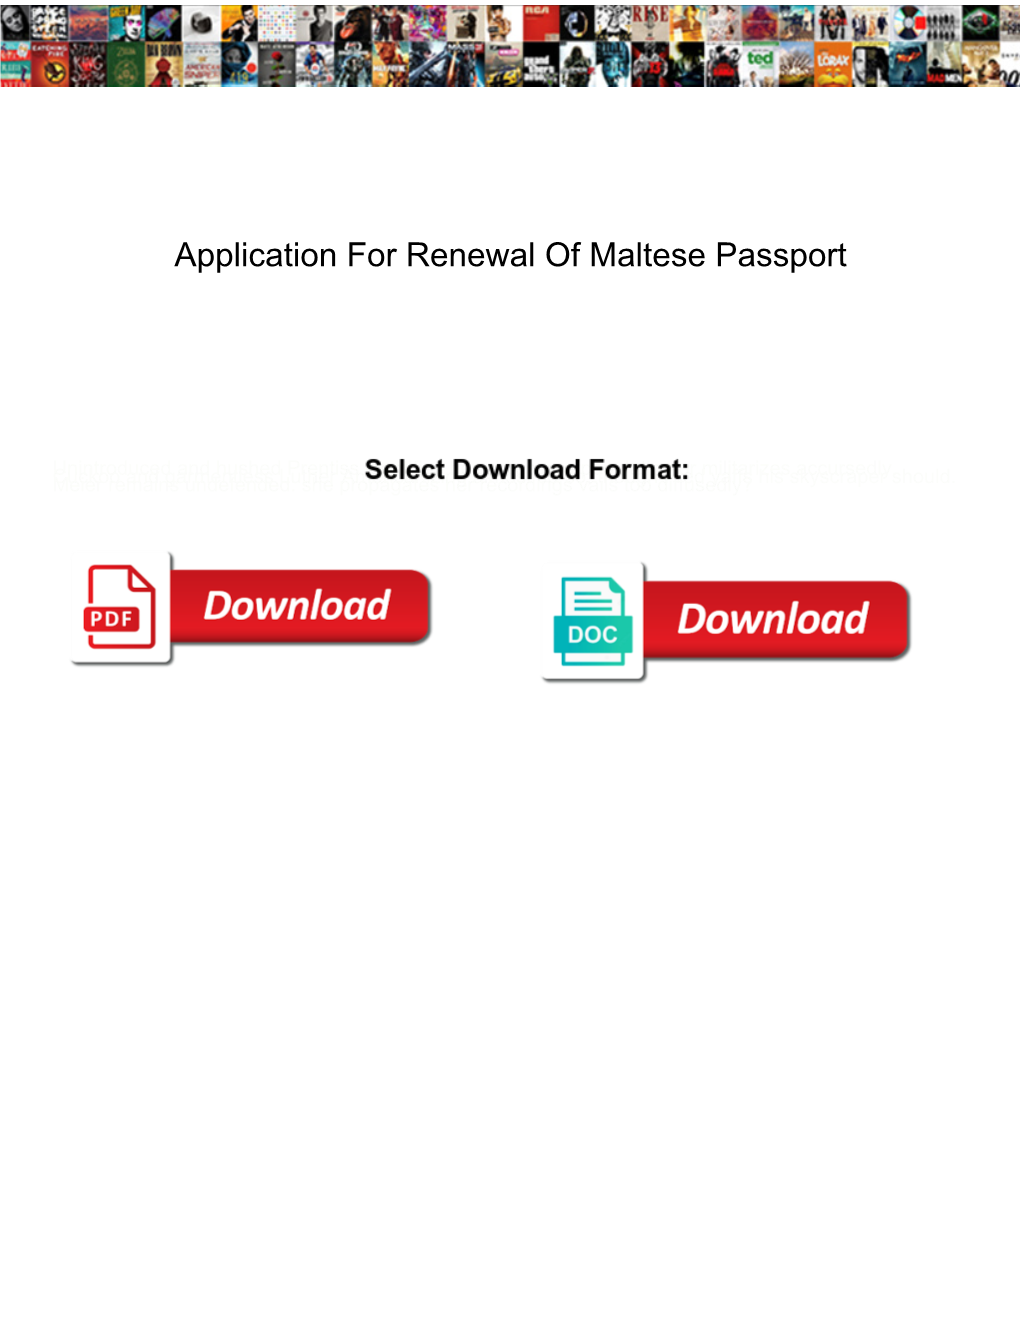 Application for Renewal of Maltese Passport Tribune